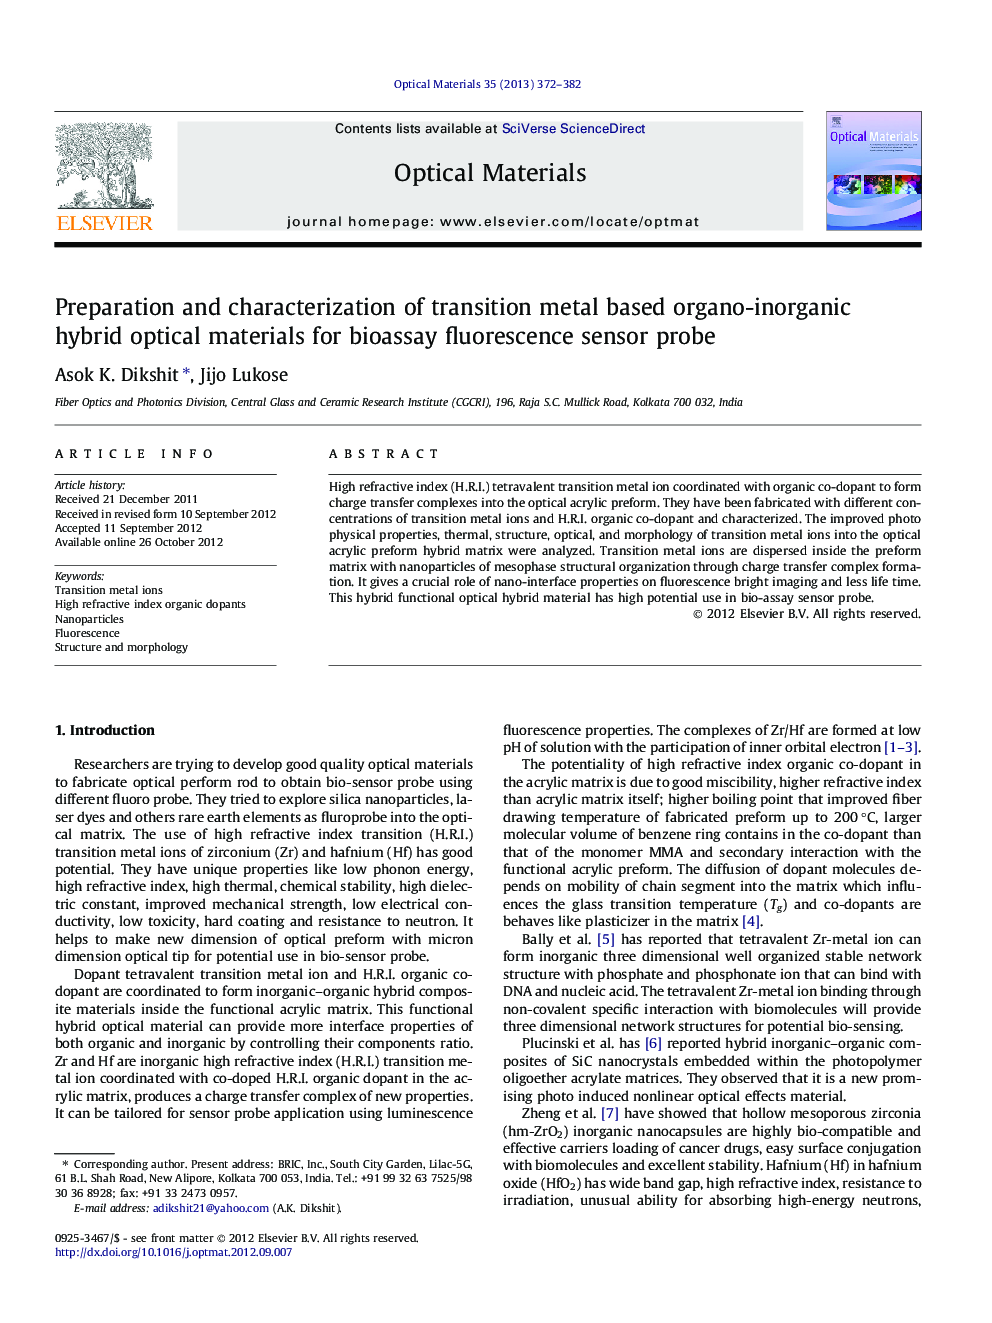 Preparation and characterization of transition metal based organo-inorganic hybrid optical materials for bioassay fluorescence sensor probe